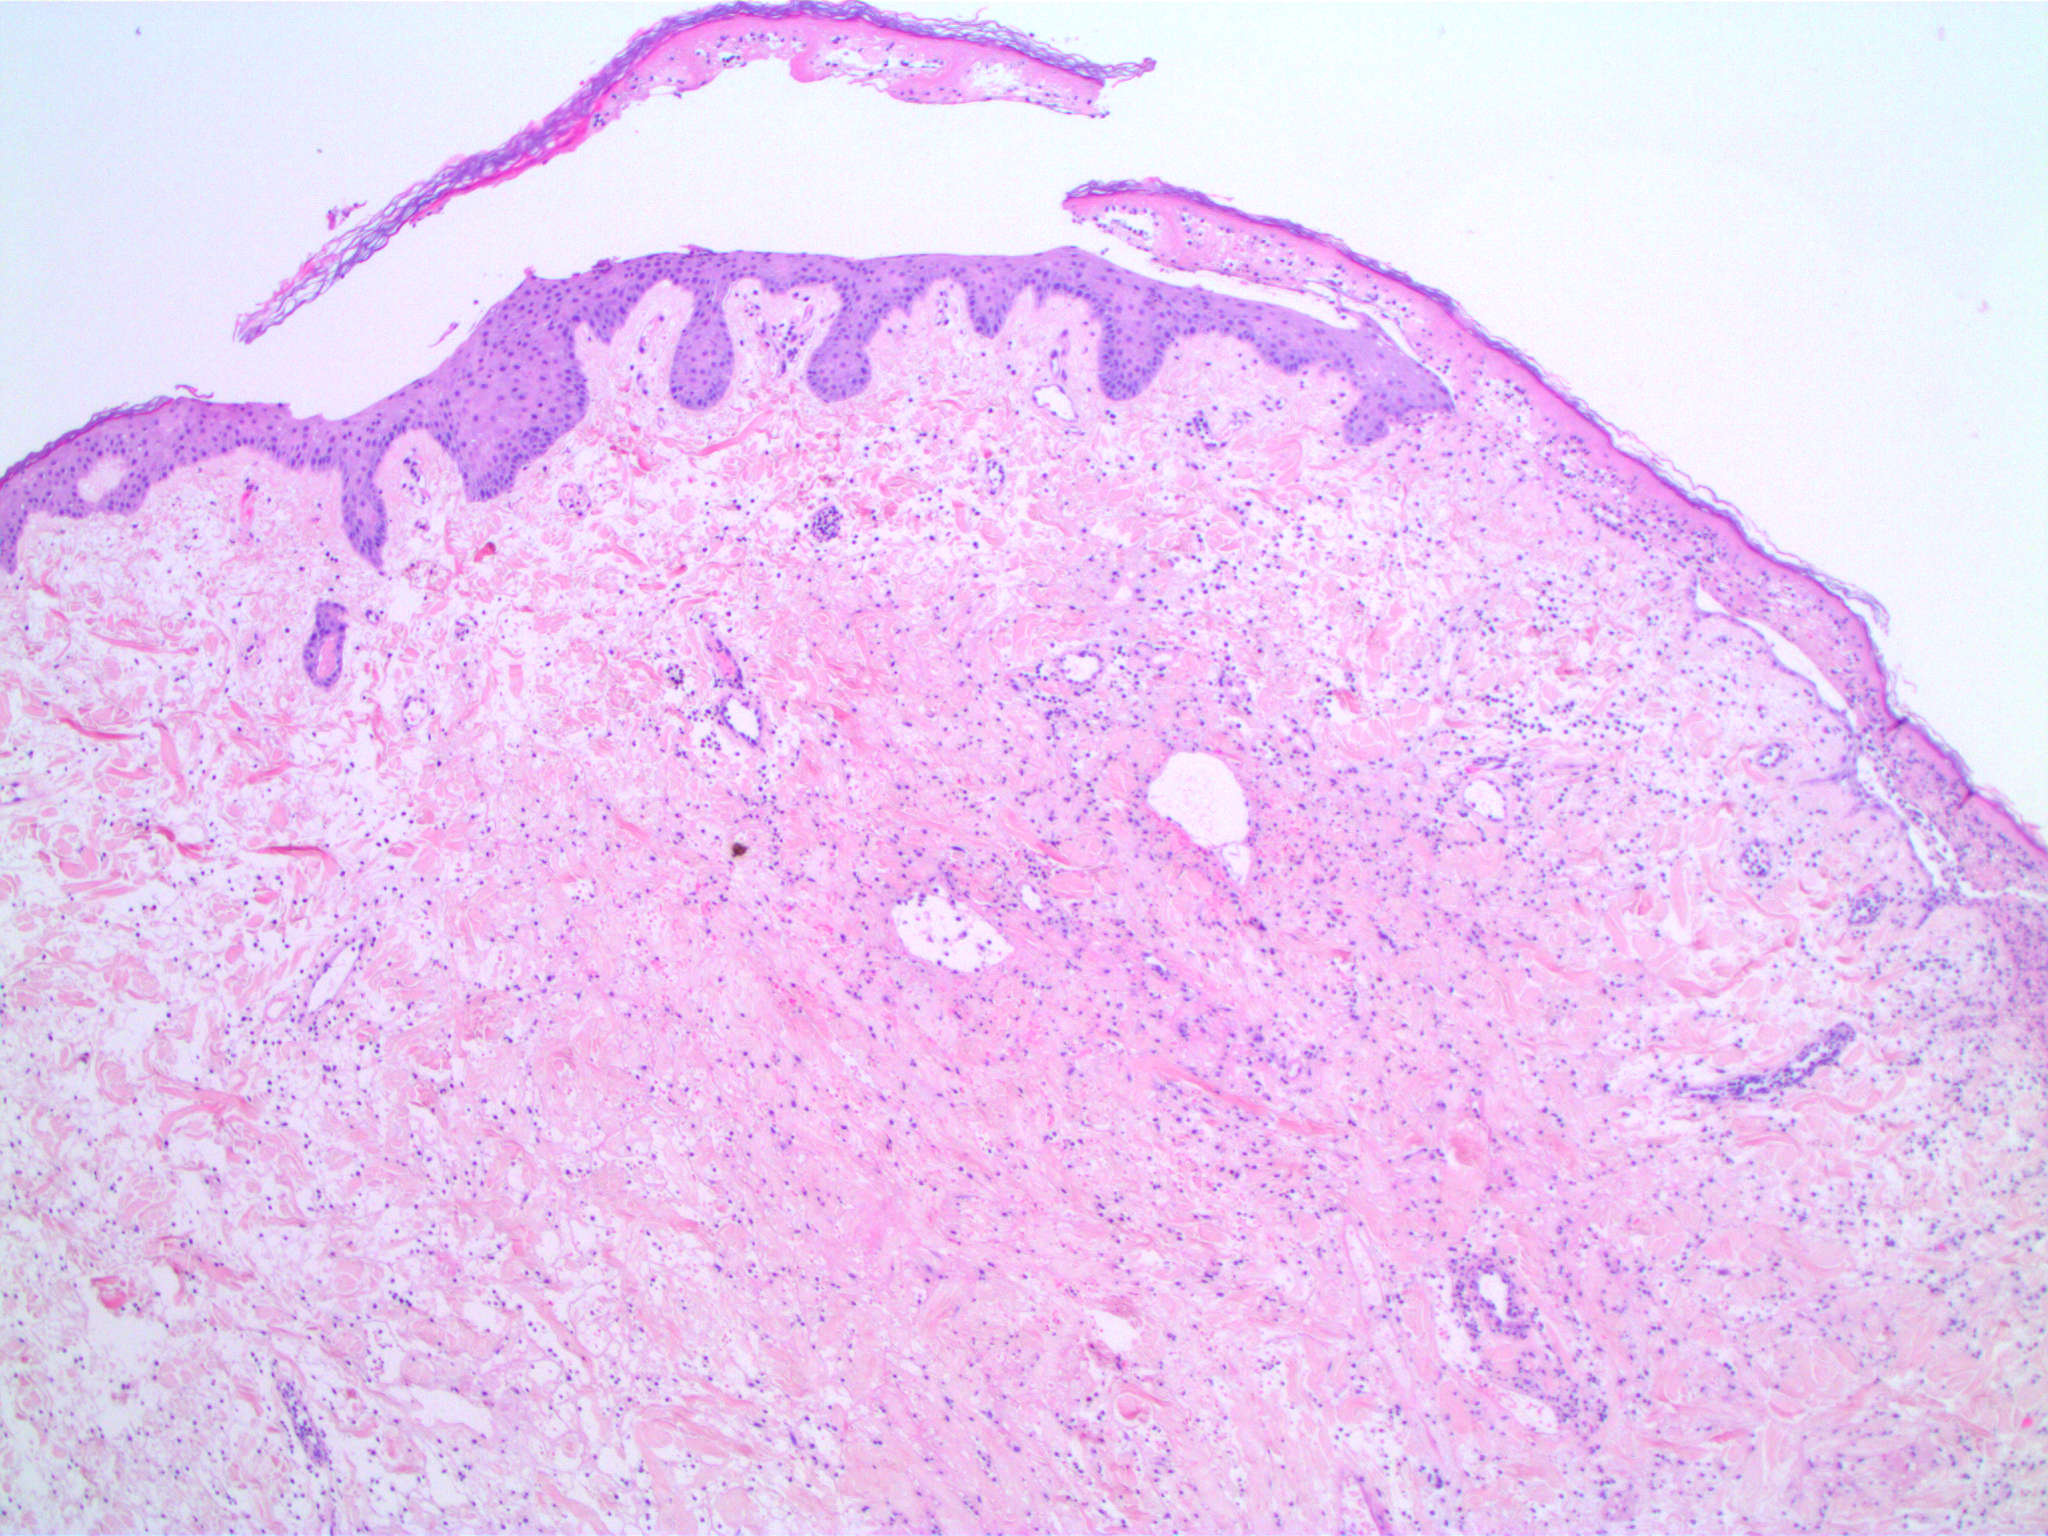 Squamous papilloma vs fibroepithelial polyp